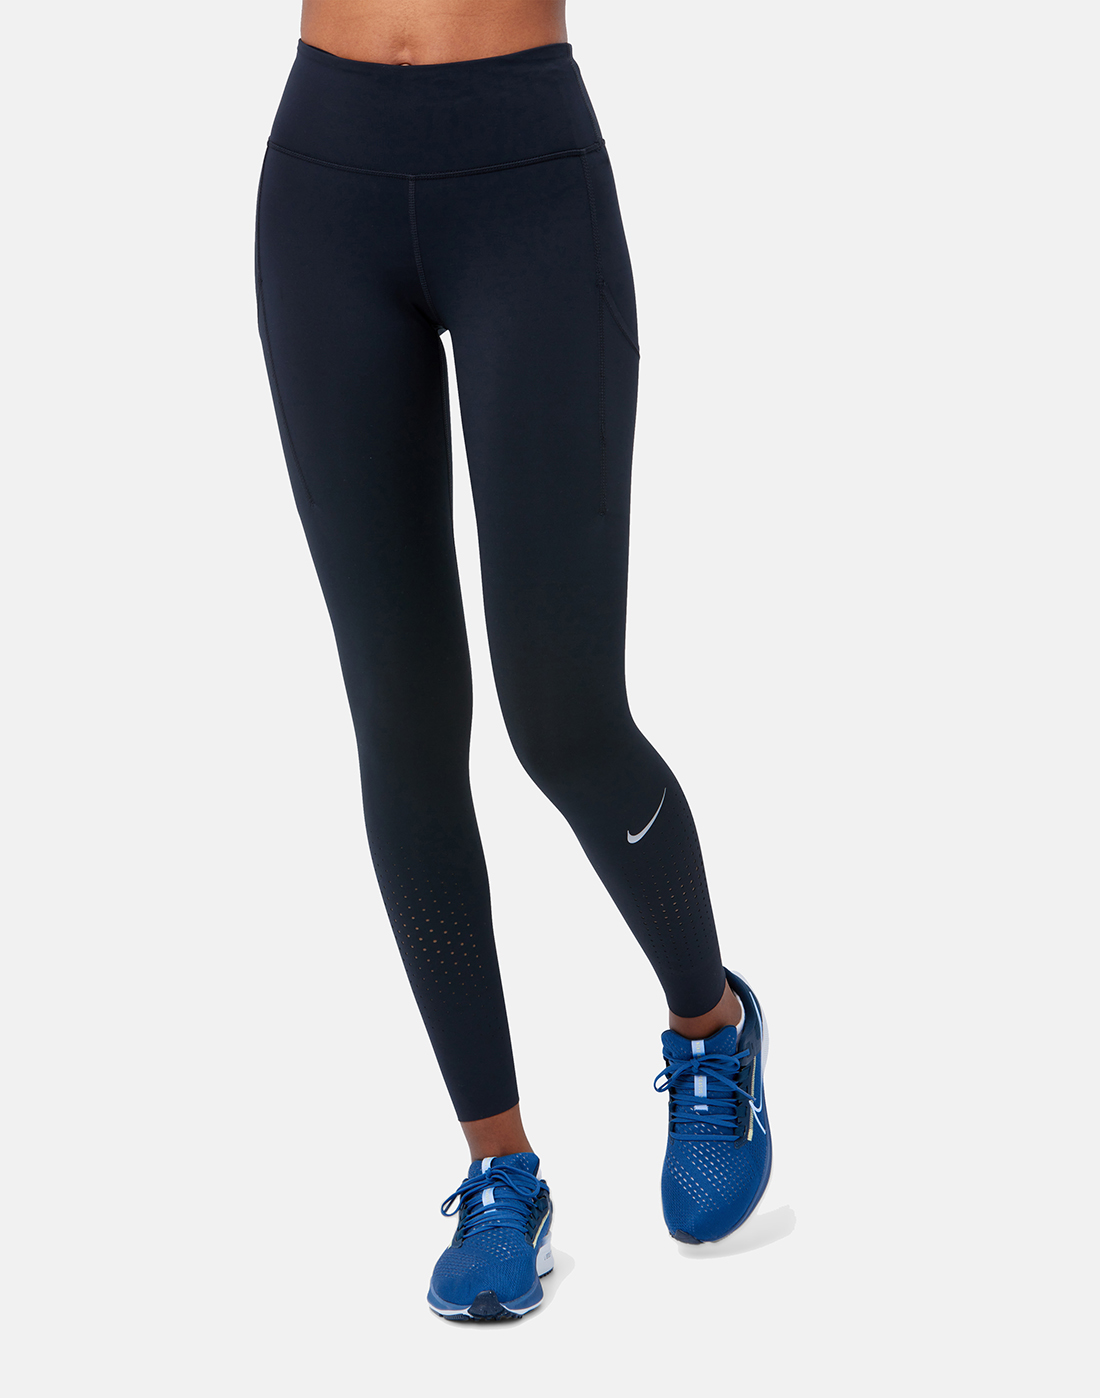 Nike Womens Epic Leggings - Black | Life Style Sports